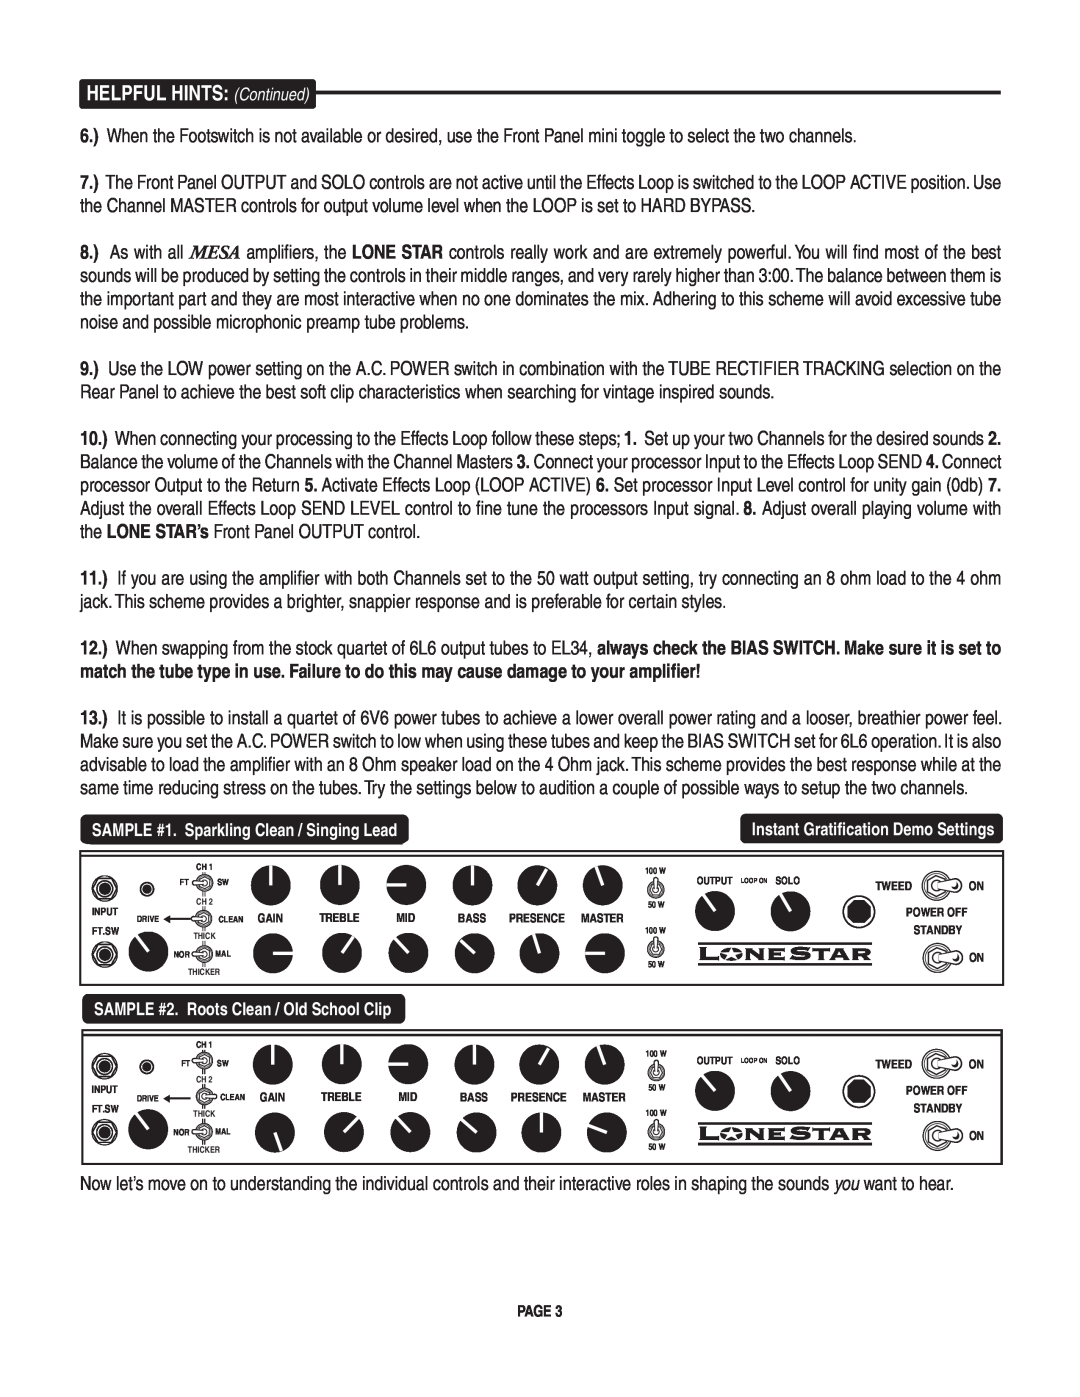 Mesa/Boogie LoneStar Amplifier owner manual HELPFUL HINTS Continued, SAMPLE #1. Sparkling Clean / Singing Lead 